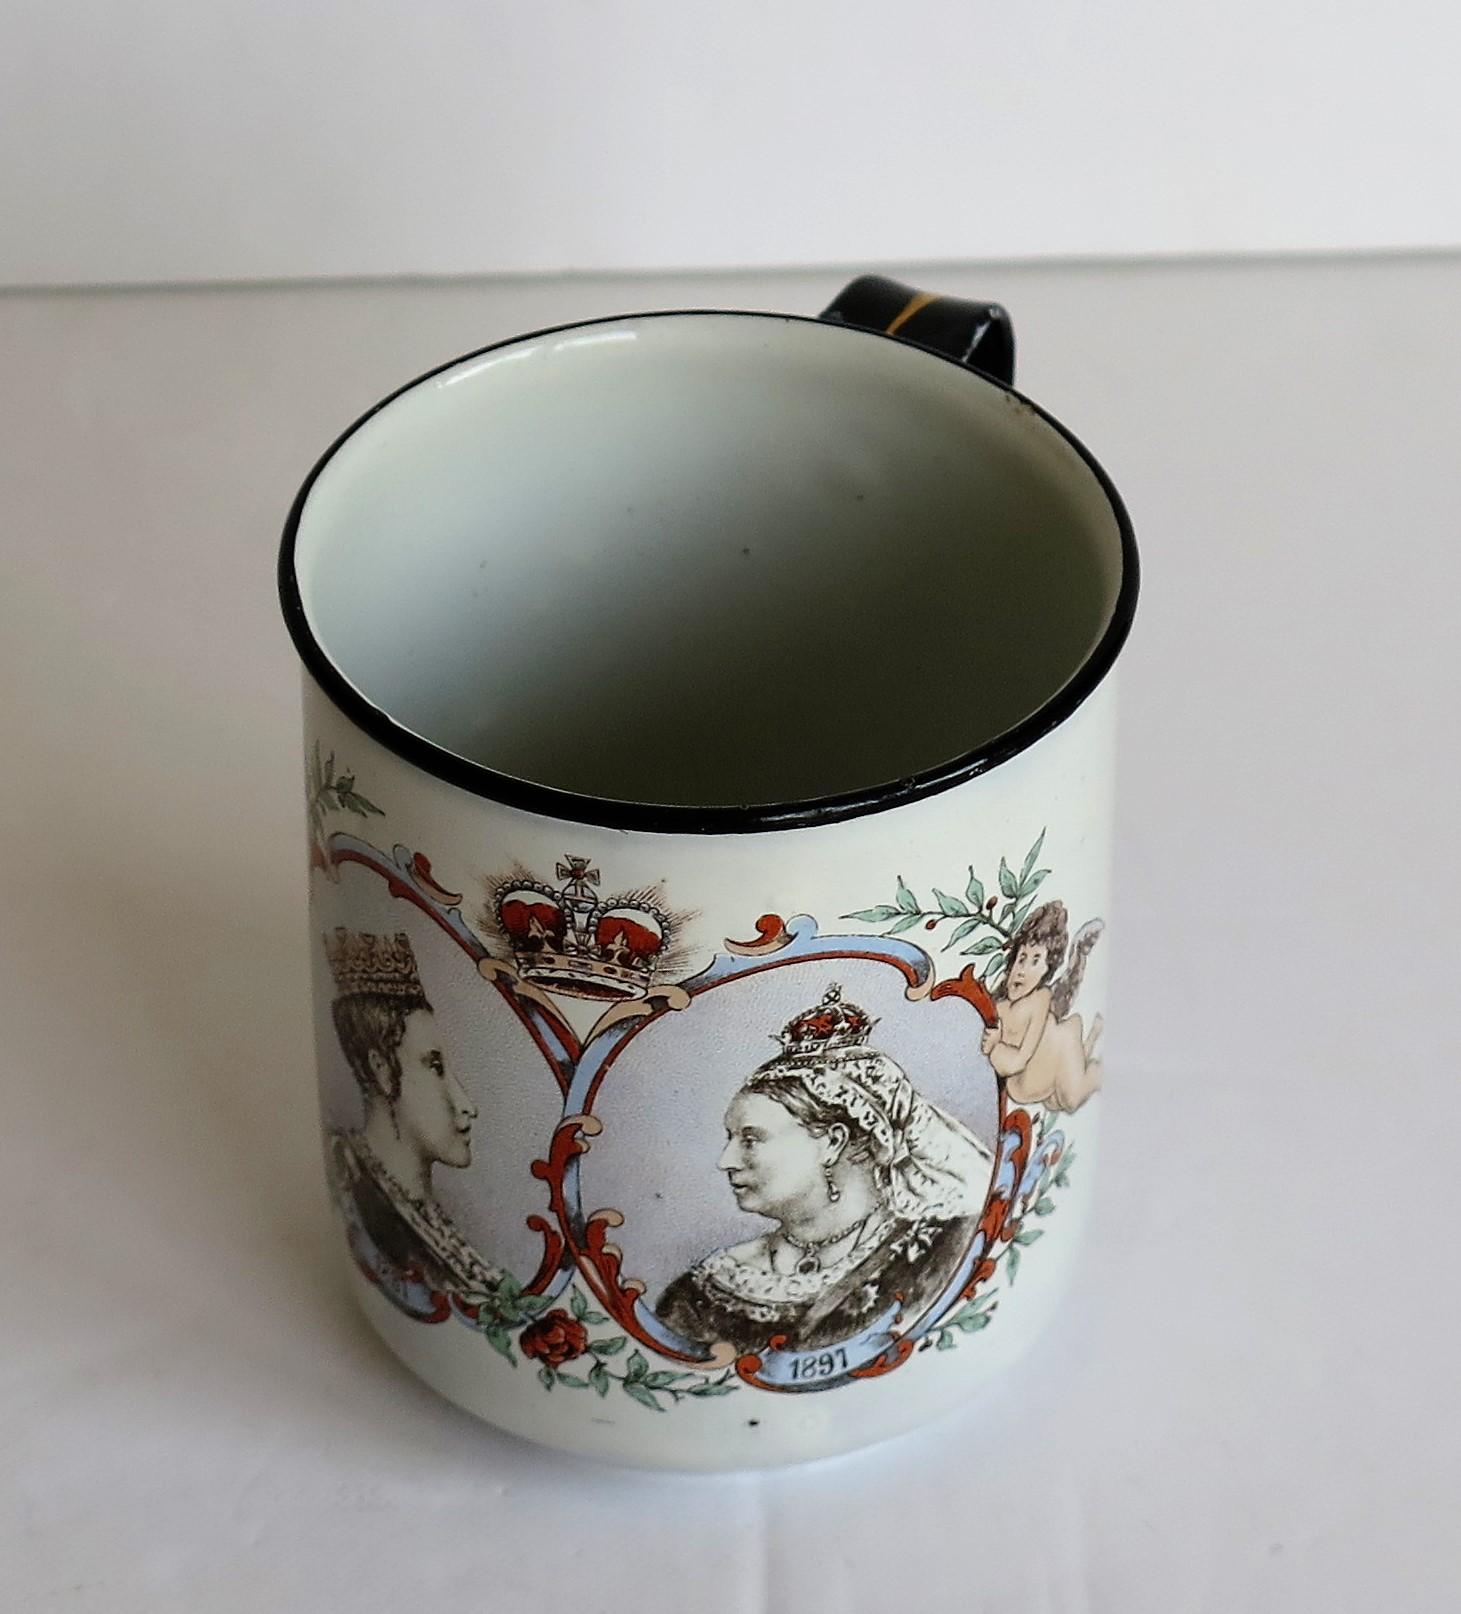 Enameled Commemorative Queen Victoria Enamel Mug or Cup Diamond Jubilee 1837-1897 